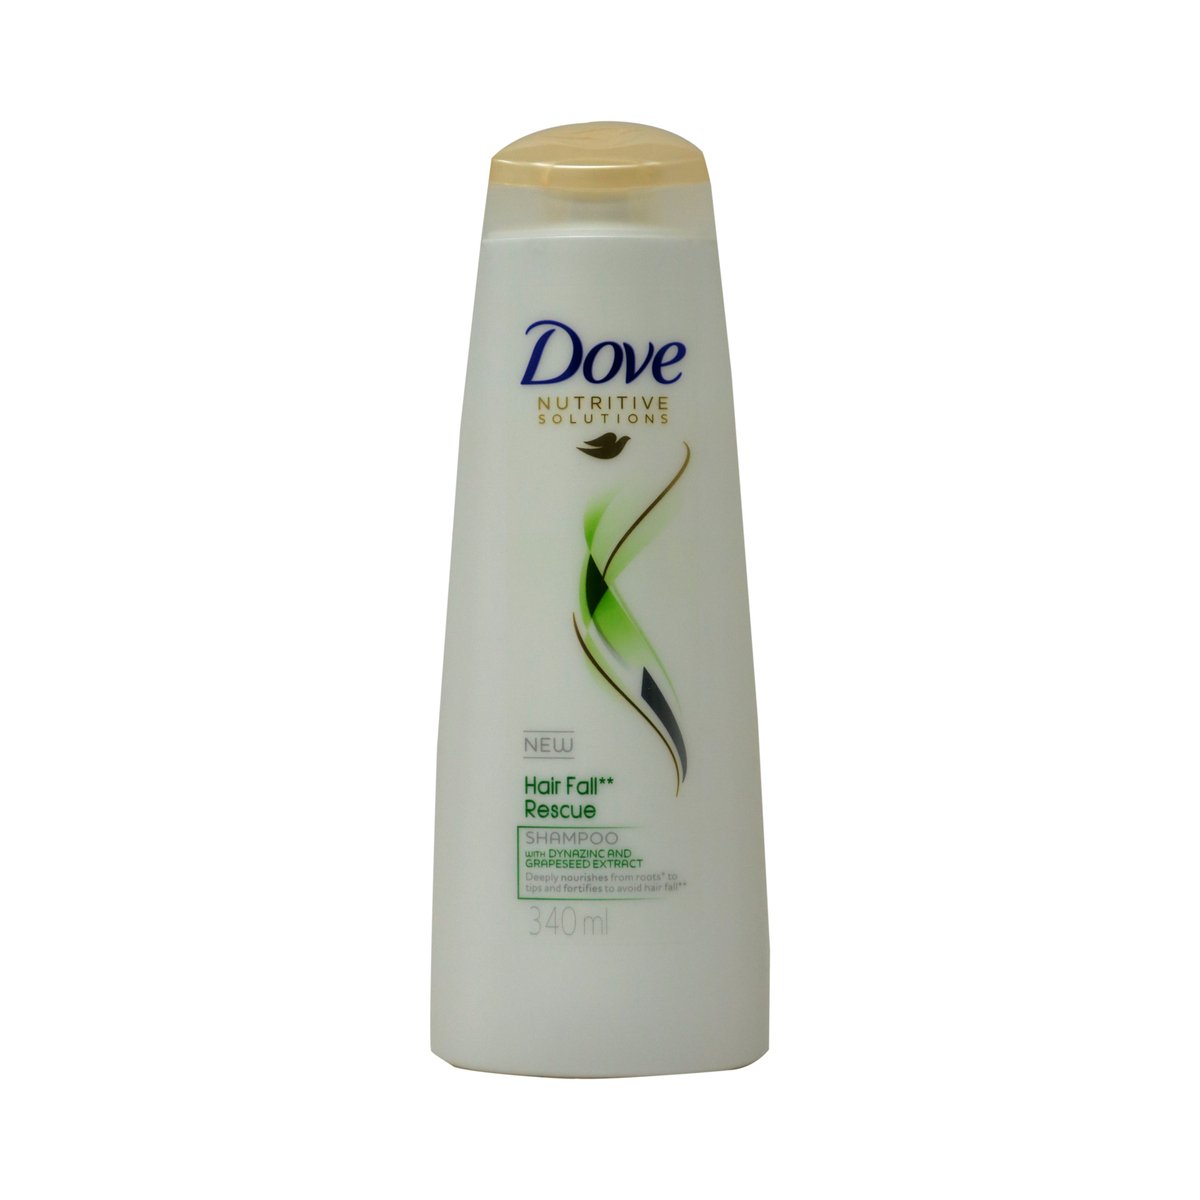 Dove Hair Therapy Hair Fall Rescue Shampoo 330ml